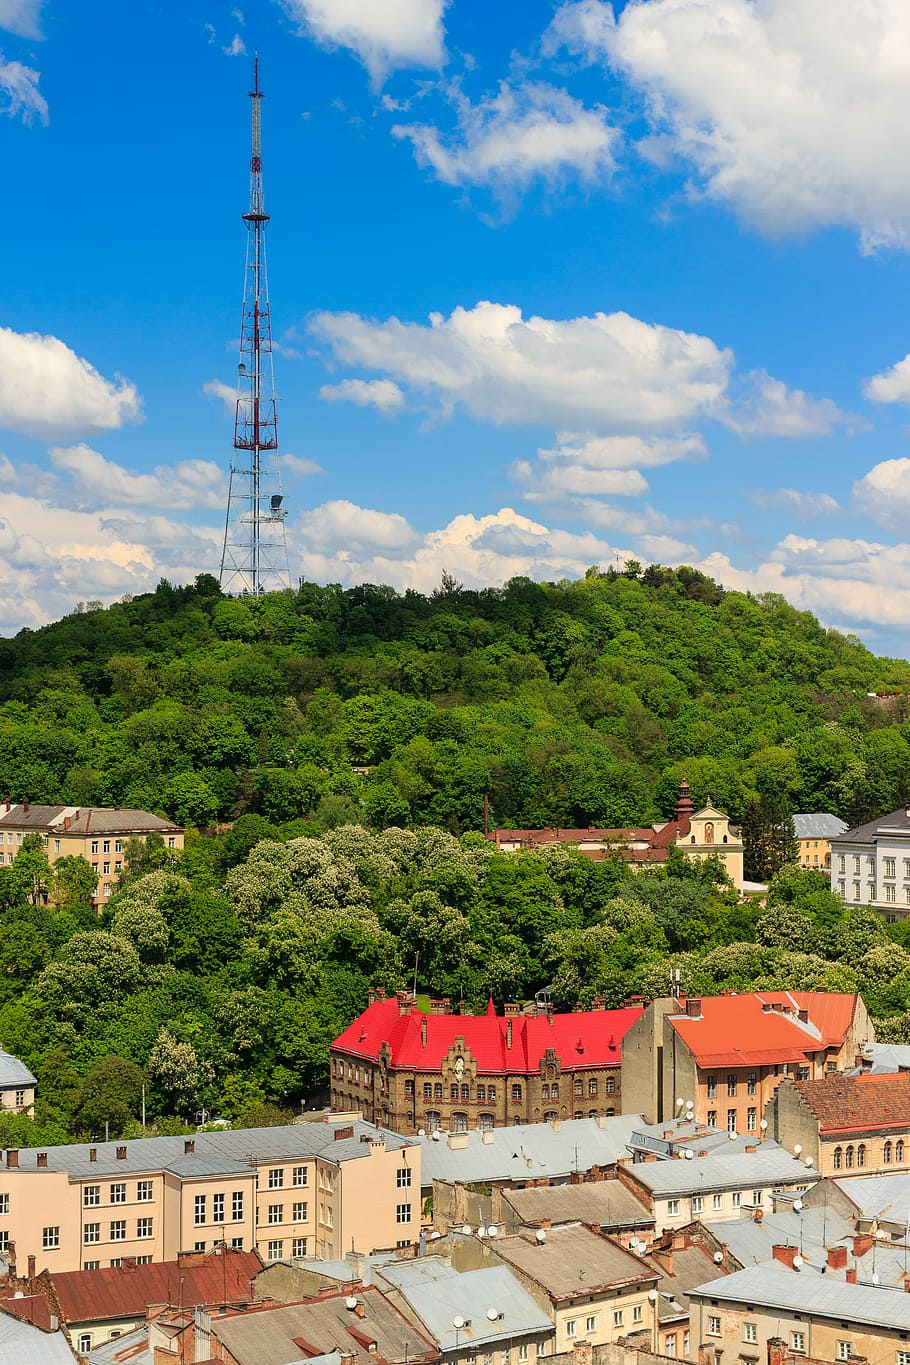 lviv, ukraine, unesco, sights, history, culture, statue, architectural, appearance, city